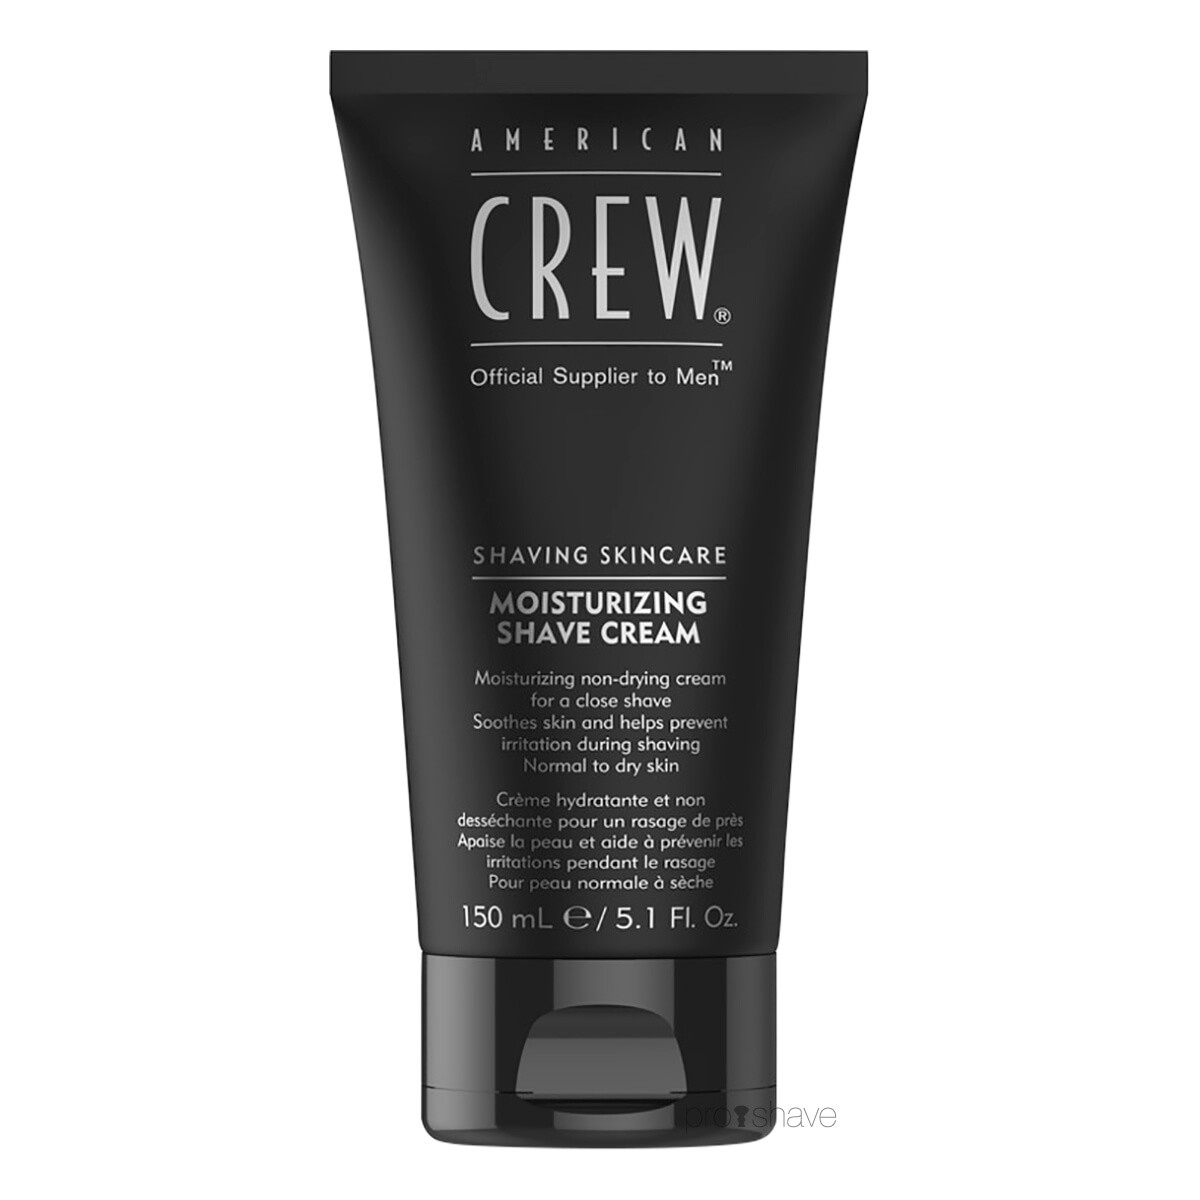 American Crew Shaving Skincare Moisturizing Shave Cream, 150 ml.